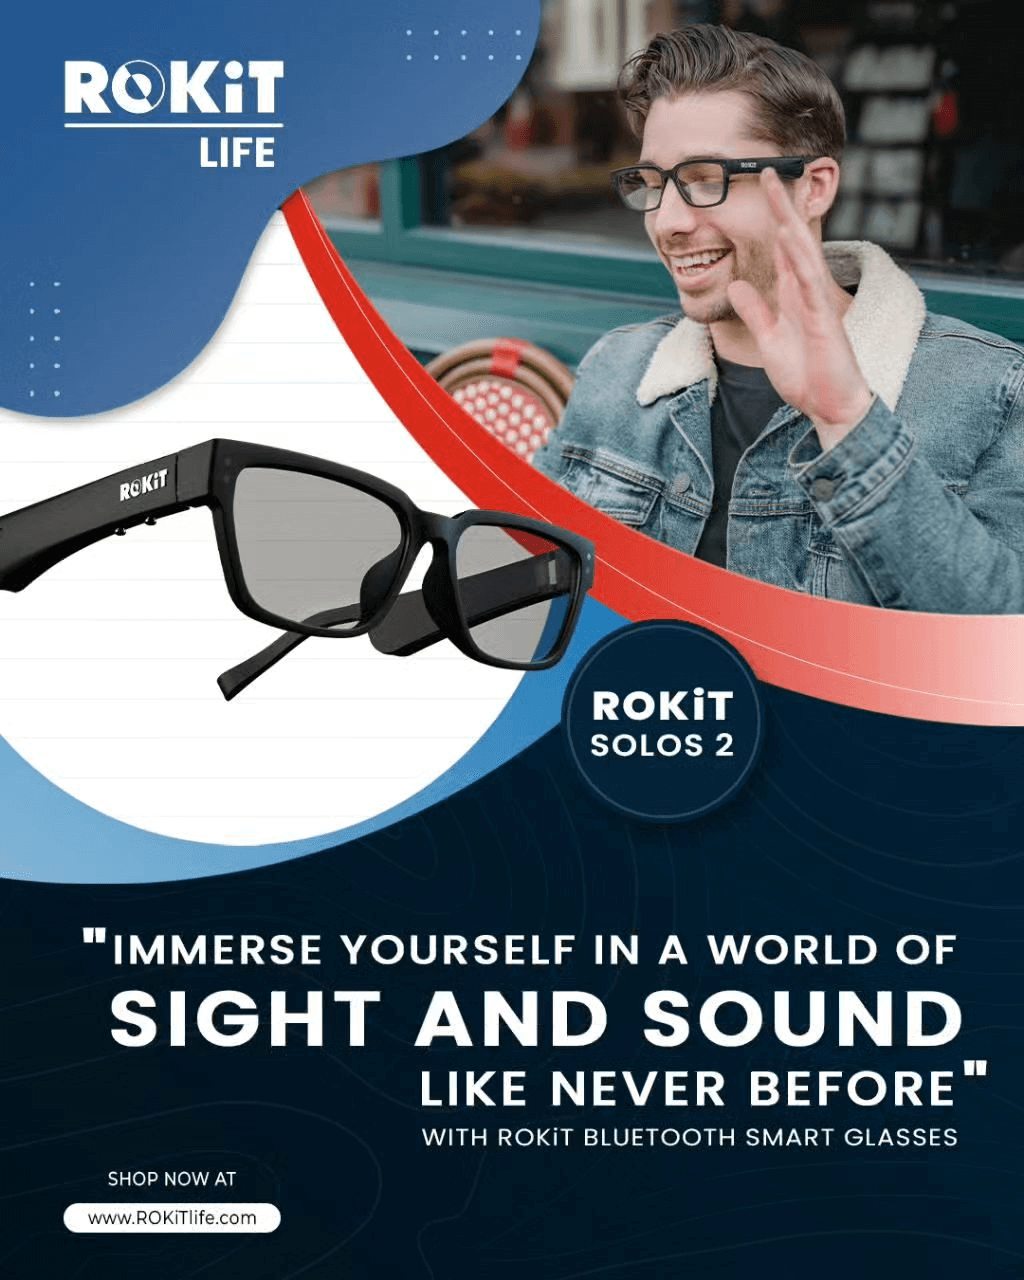 wear ROKiT blue light solos 2 smart audio glasses outdoors